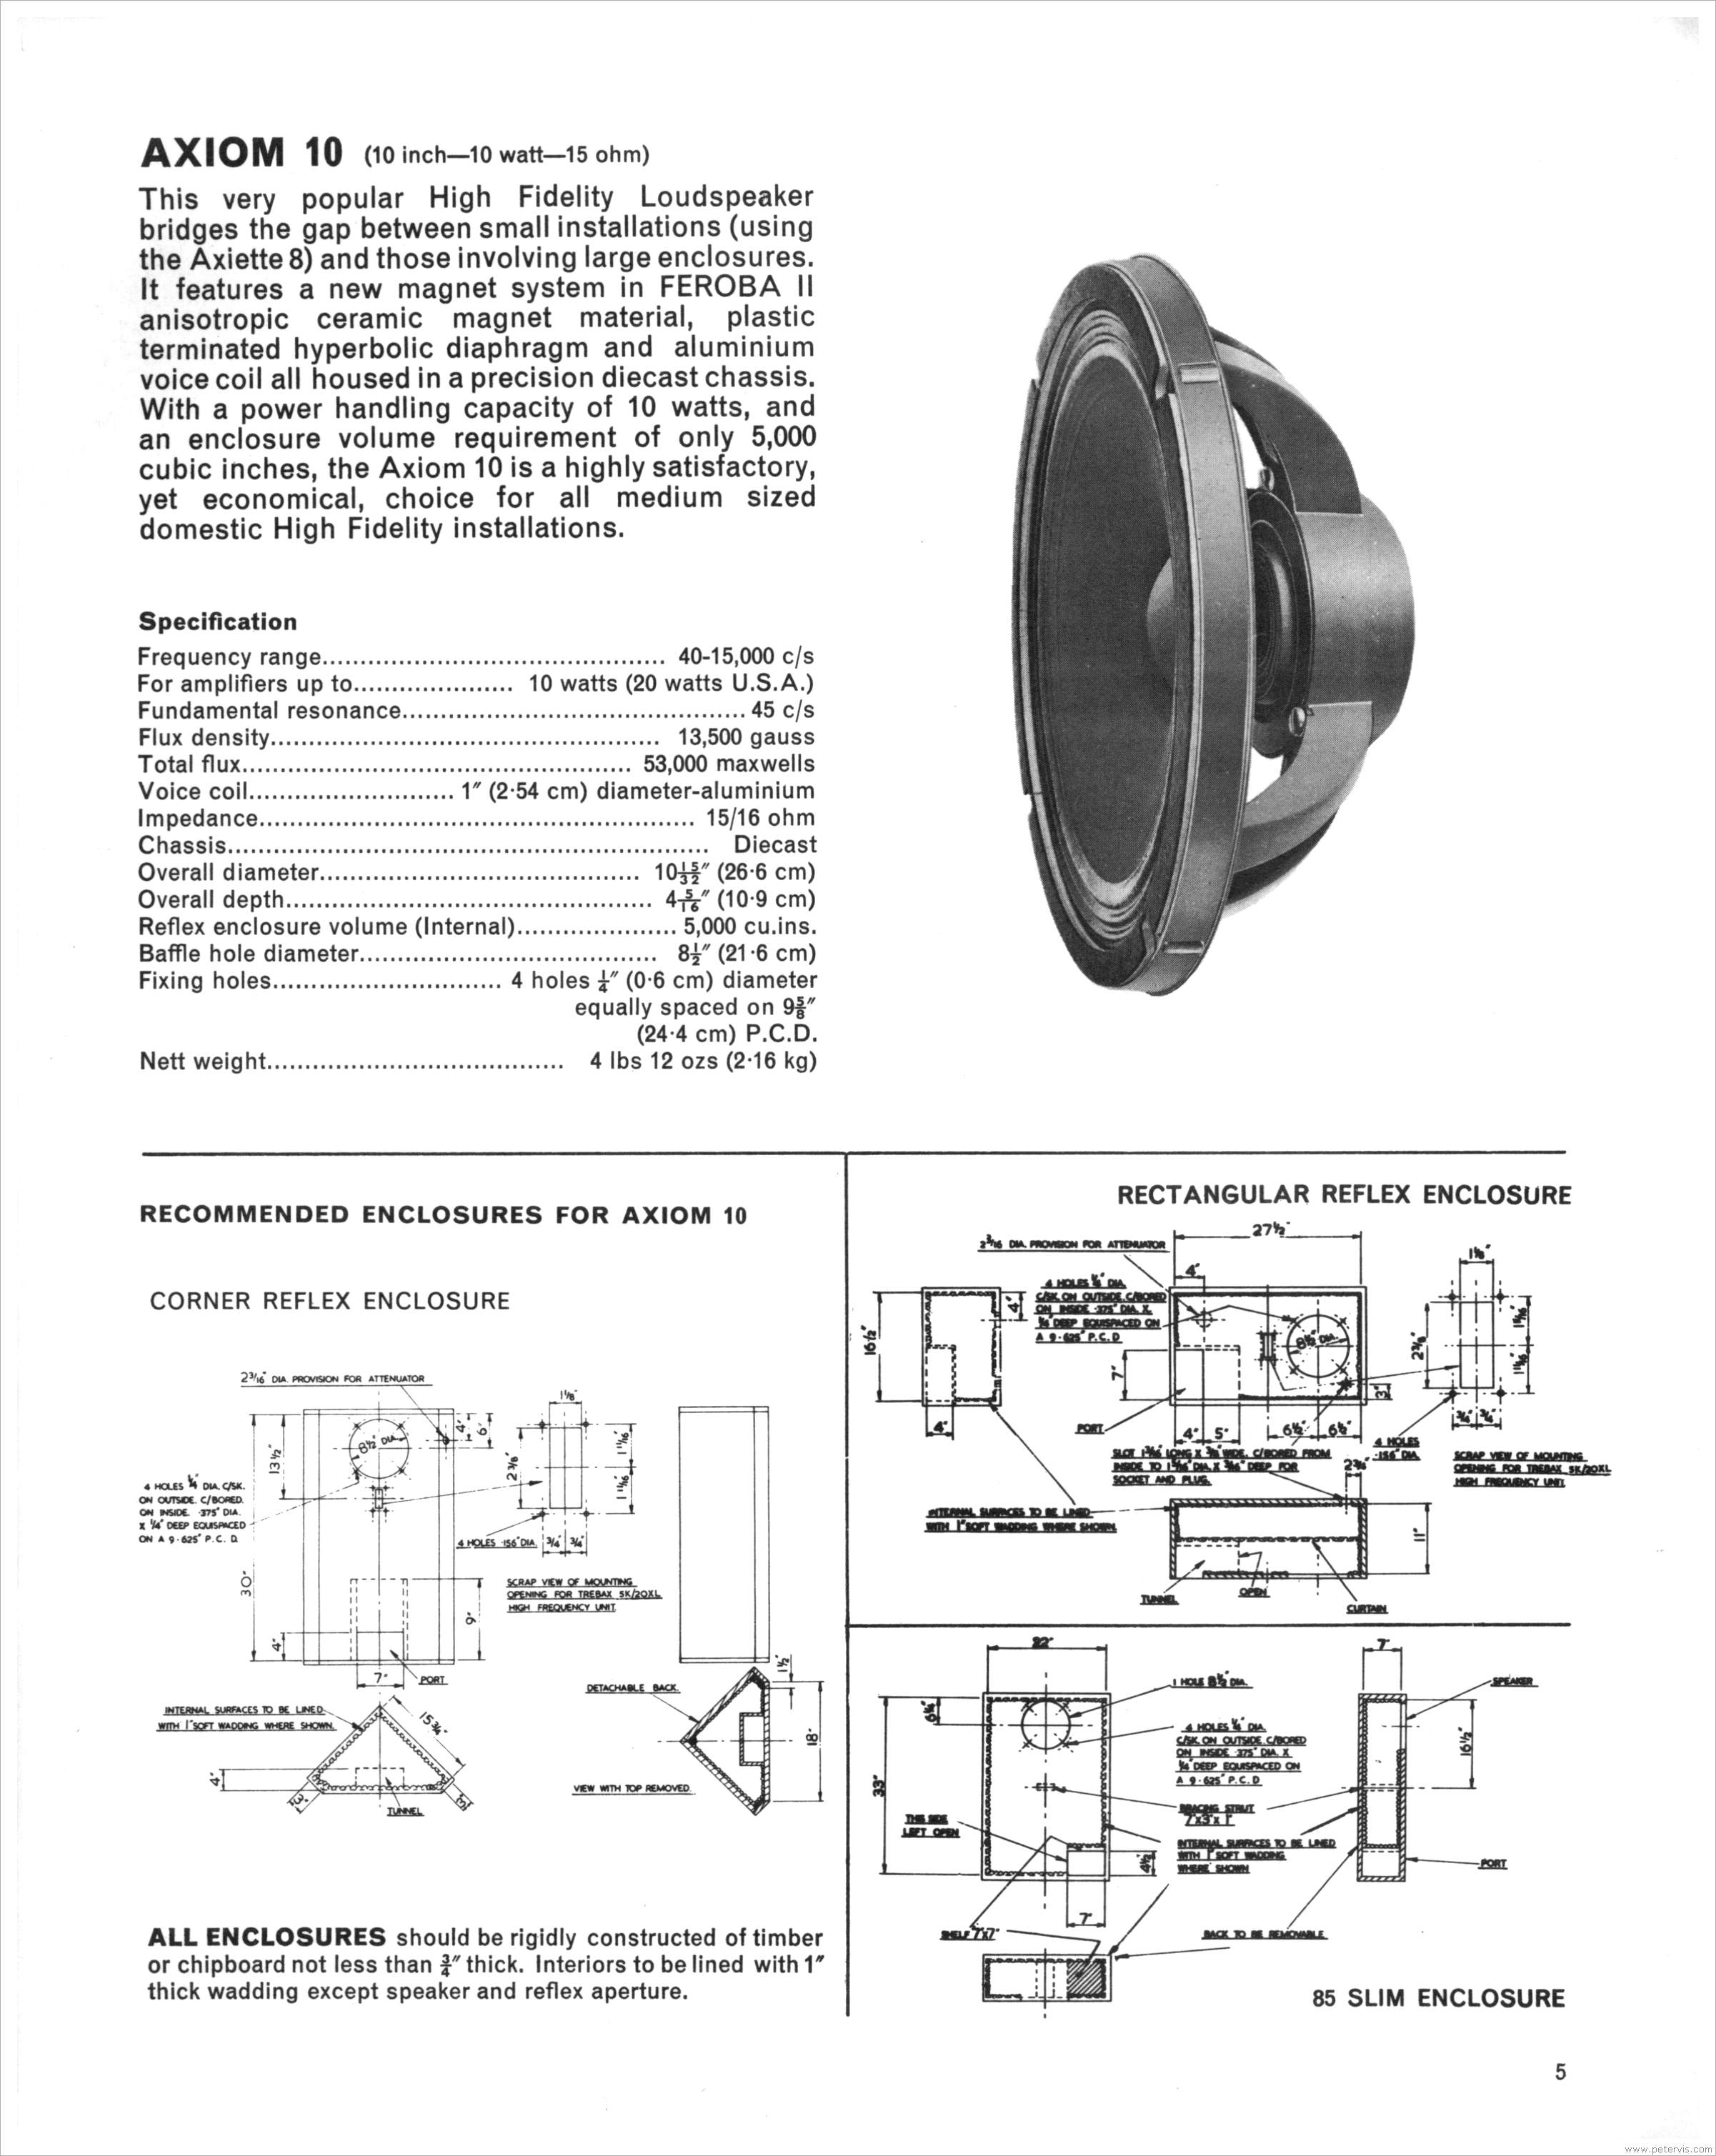 Goodmans Axiom 10 -- High Fidelity Loudspeaker Manual 1963-1964